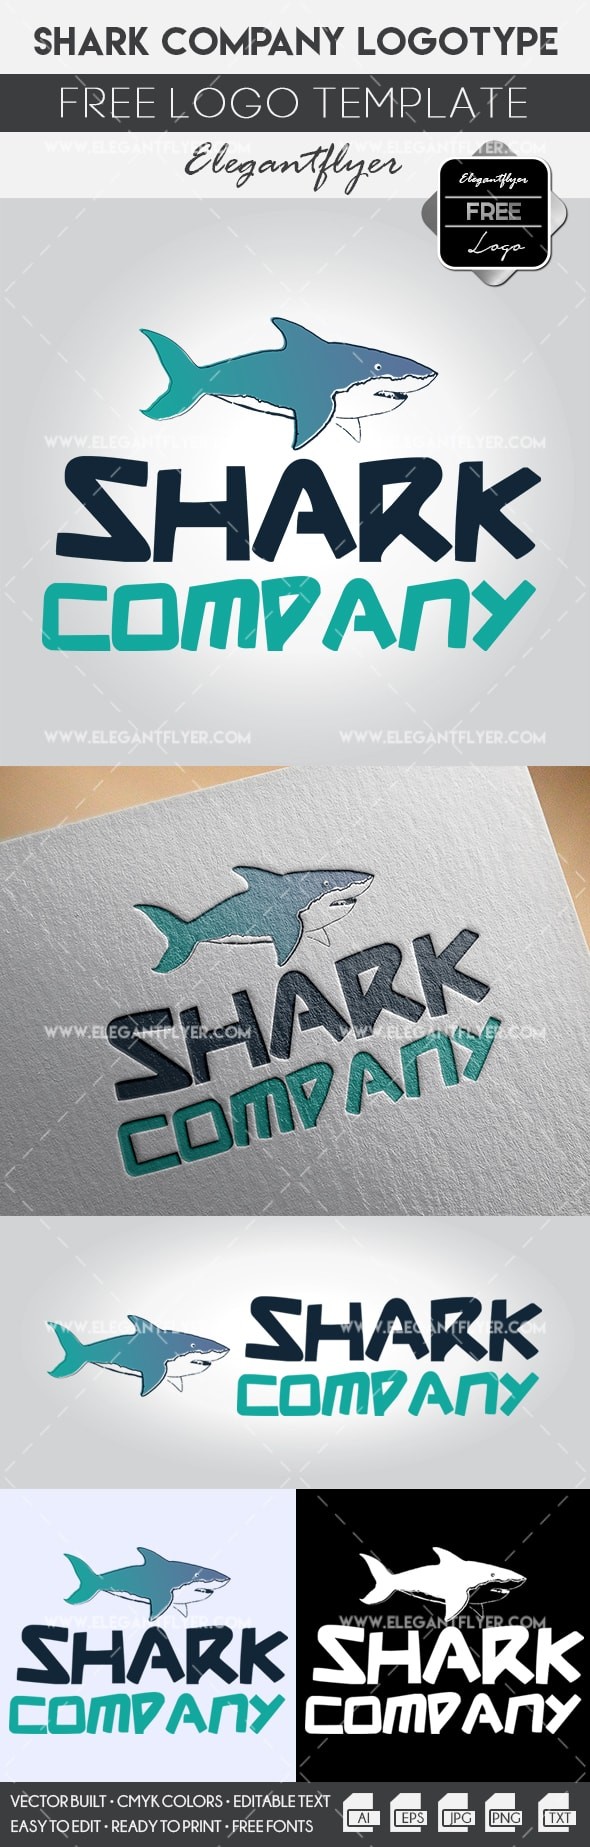 Shark Company by ElegantFlyer